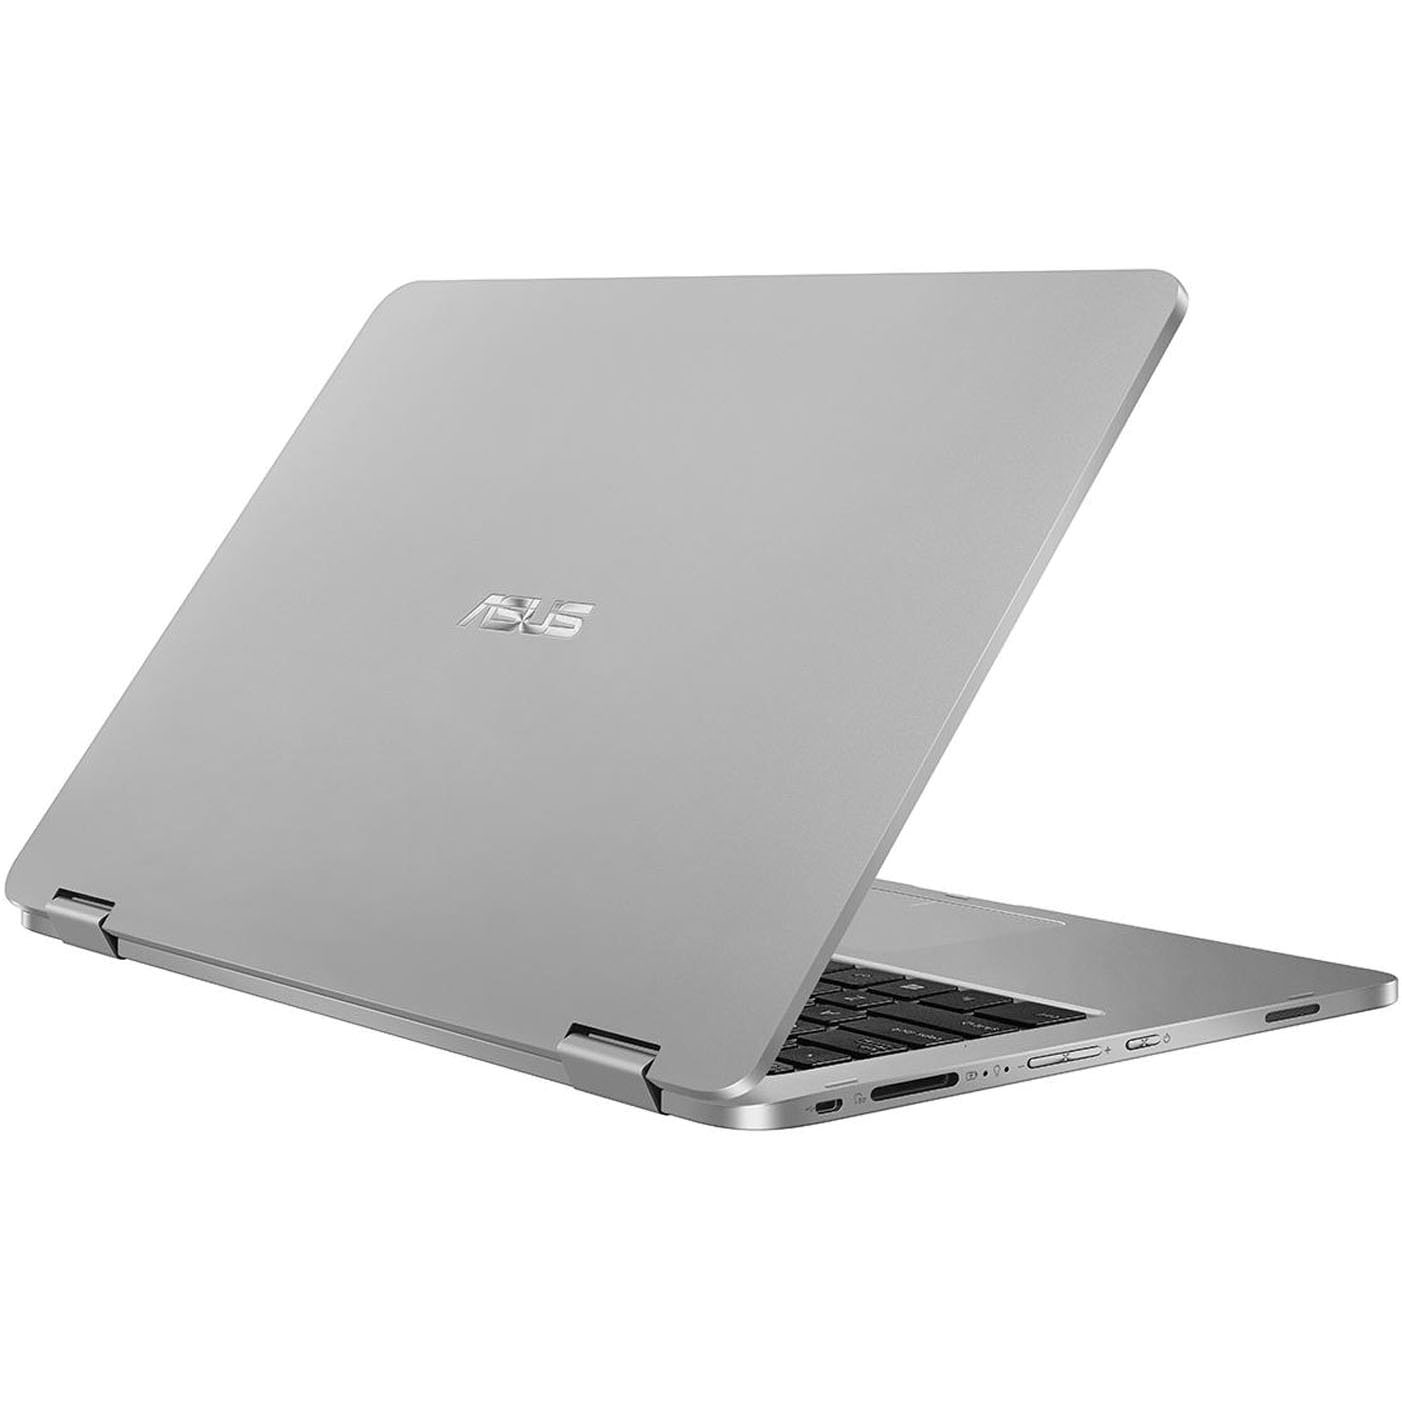 ASUS VivoBook Flip 14 Thin and Light 2-in-1 HD Touchscreen Laptop, Intel® Quad-Core Pentium® N4200 Processor (2.5GHz), 4GB RAM, 64GB EMMC Storage, Windows 10 Home - image 5 of 8